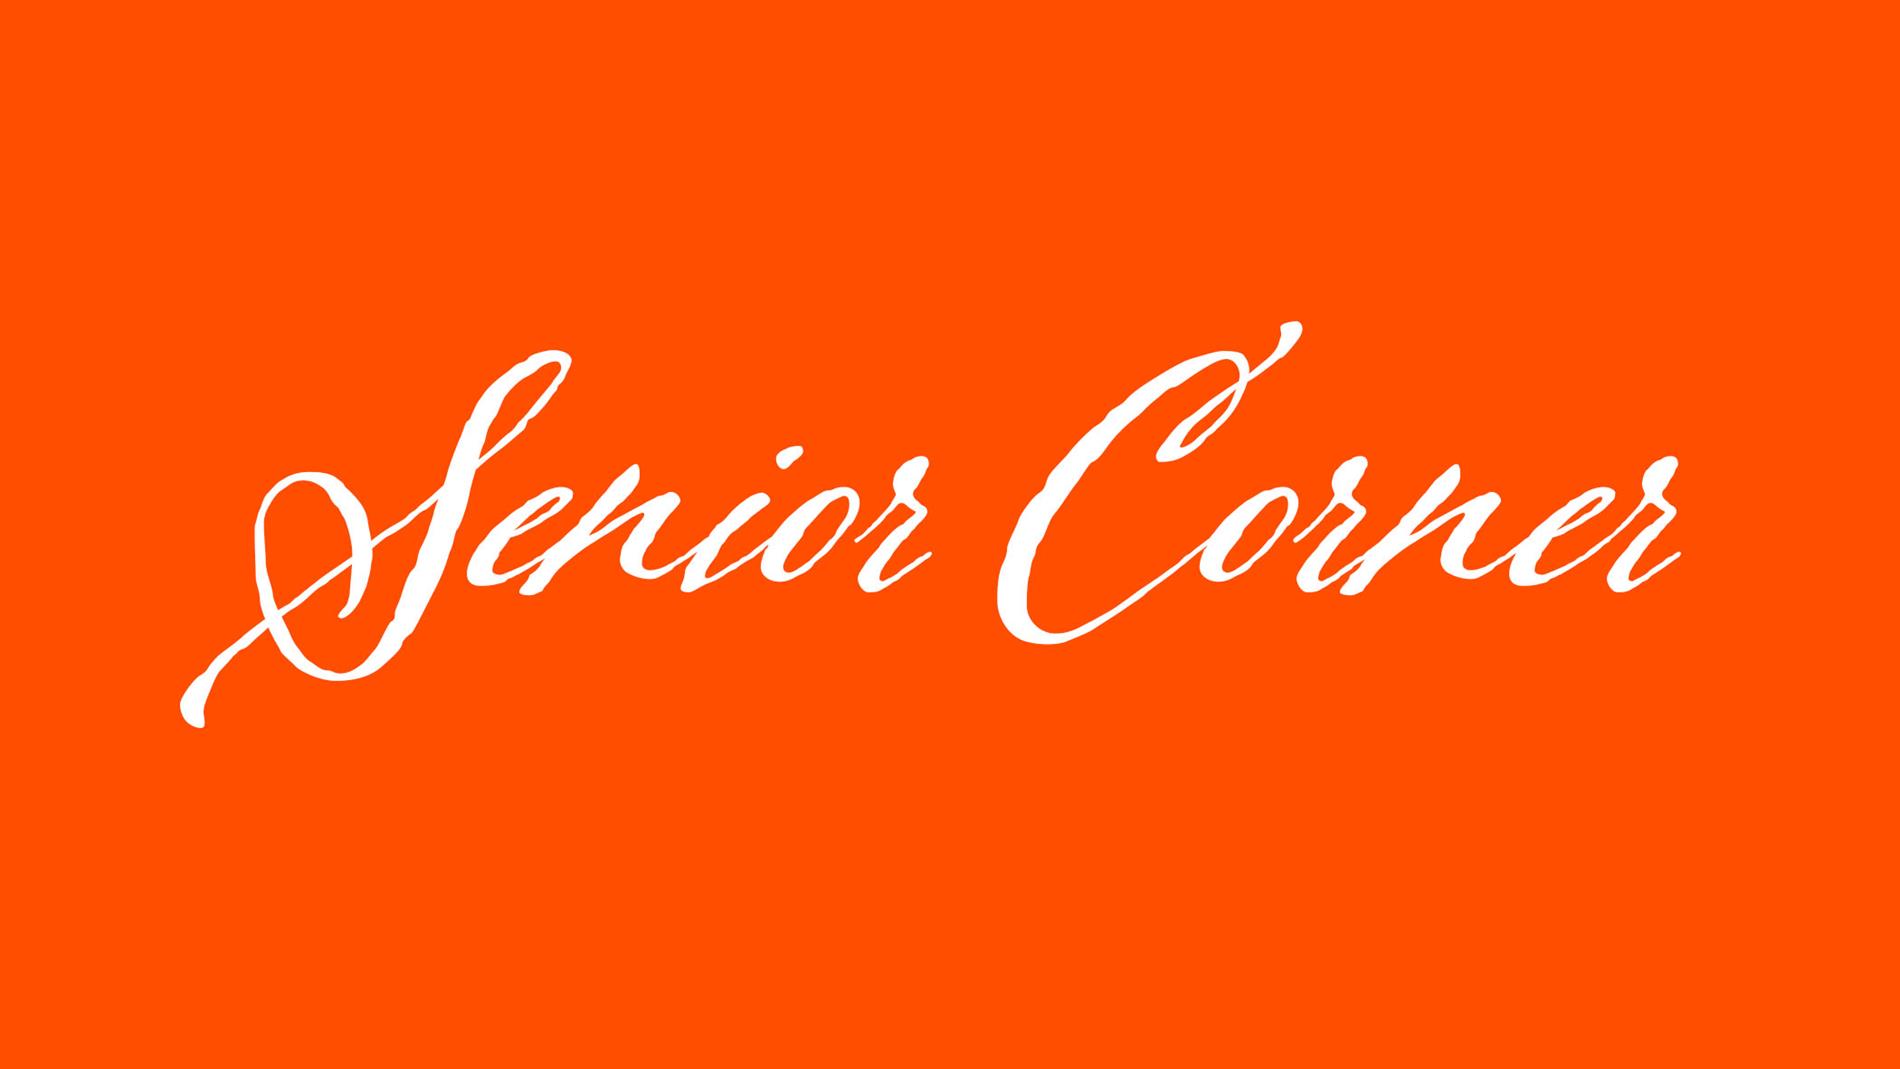 Senior Corner